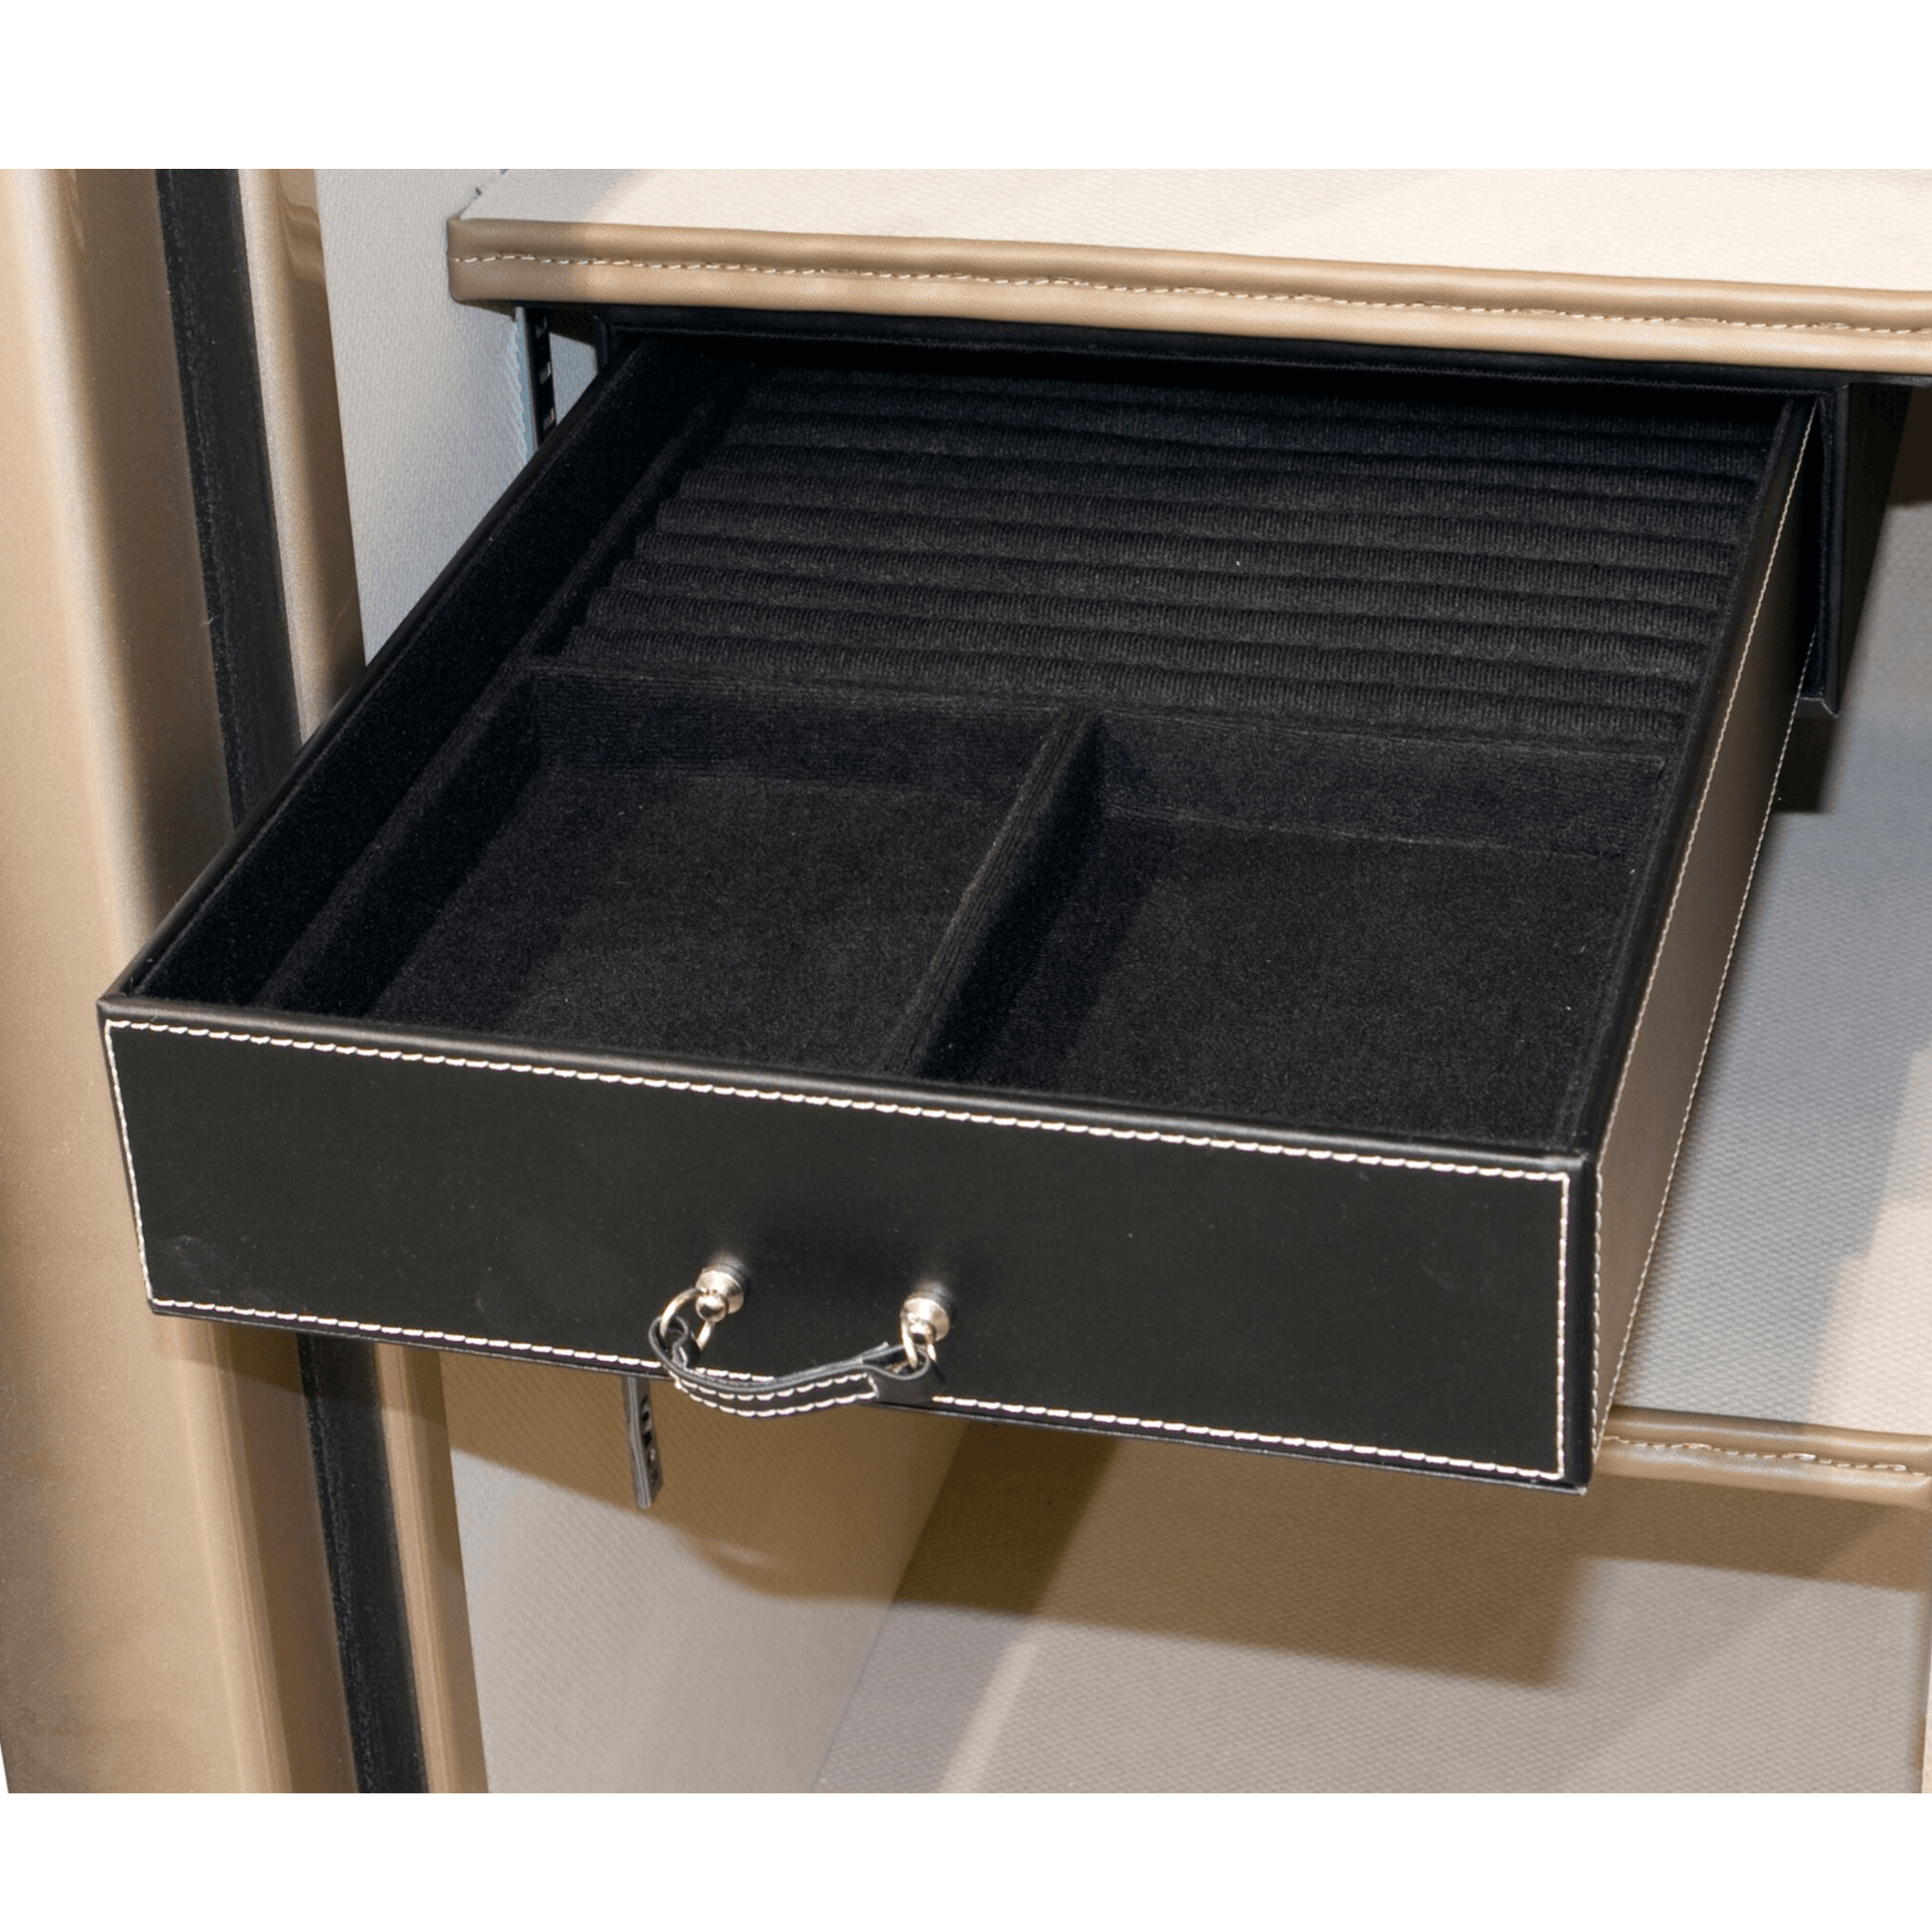 Accessory - storage - jewelry drawer - 11.5 inch - under shelf mount - 35-50 size safes -  MODLOCK